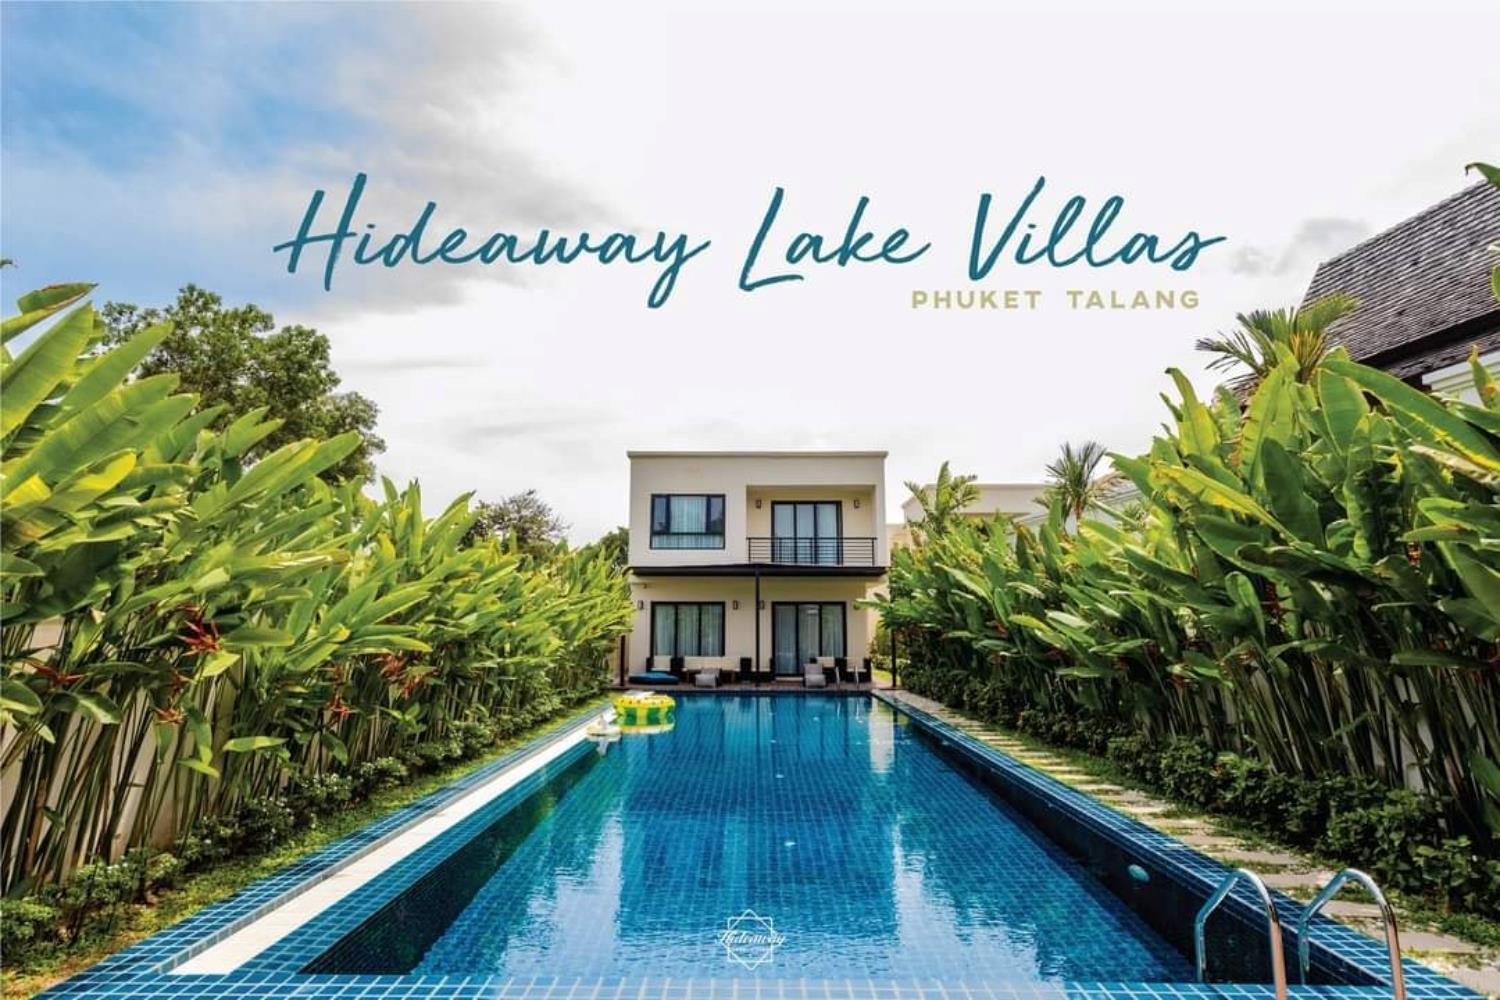 Hideaway Lake Villas